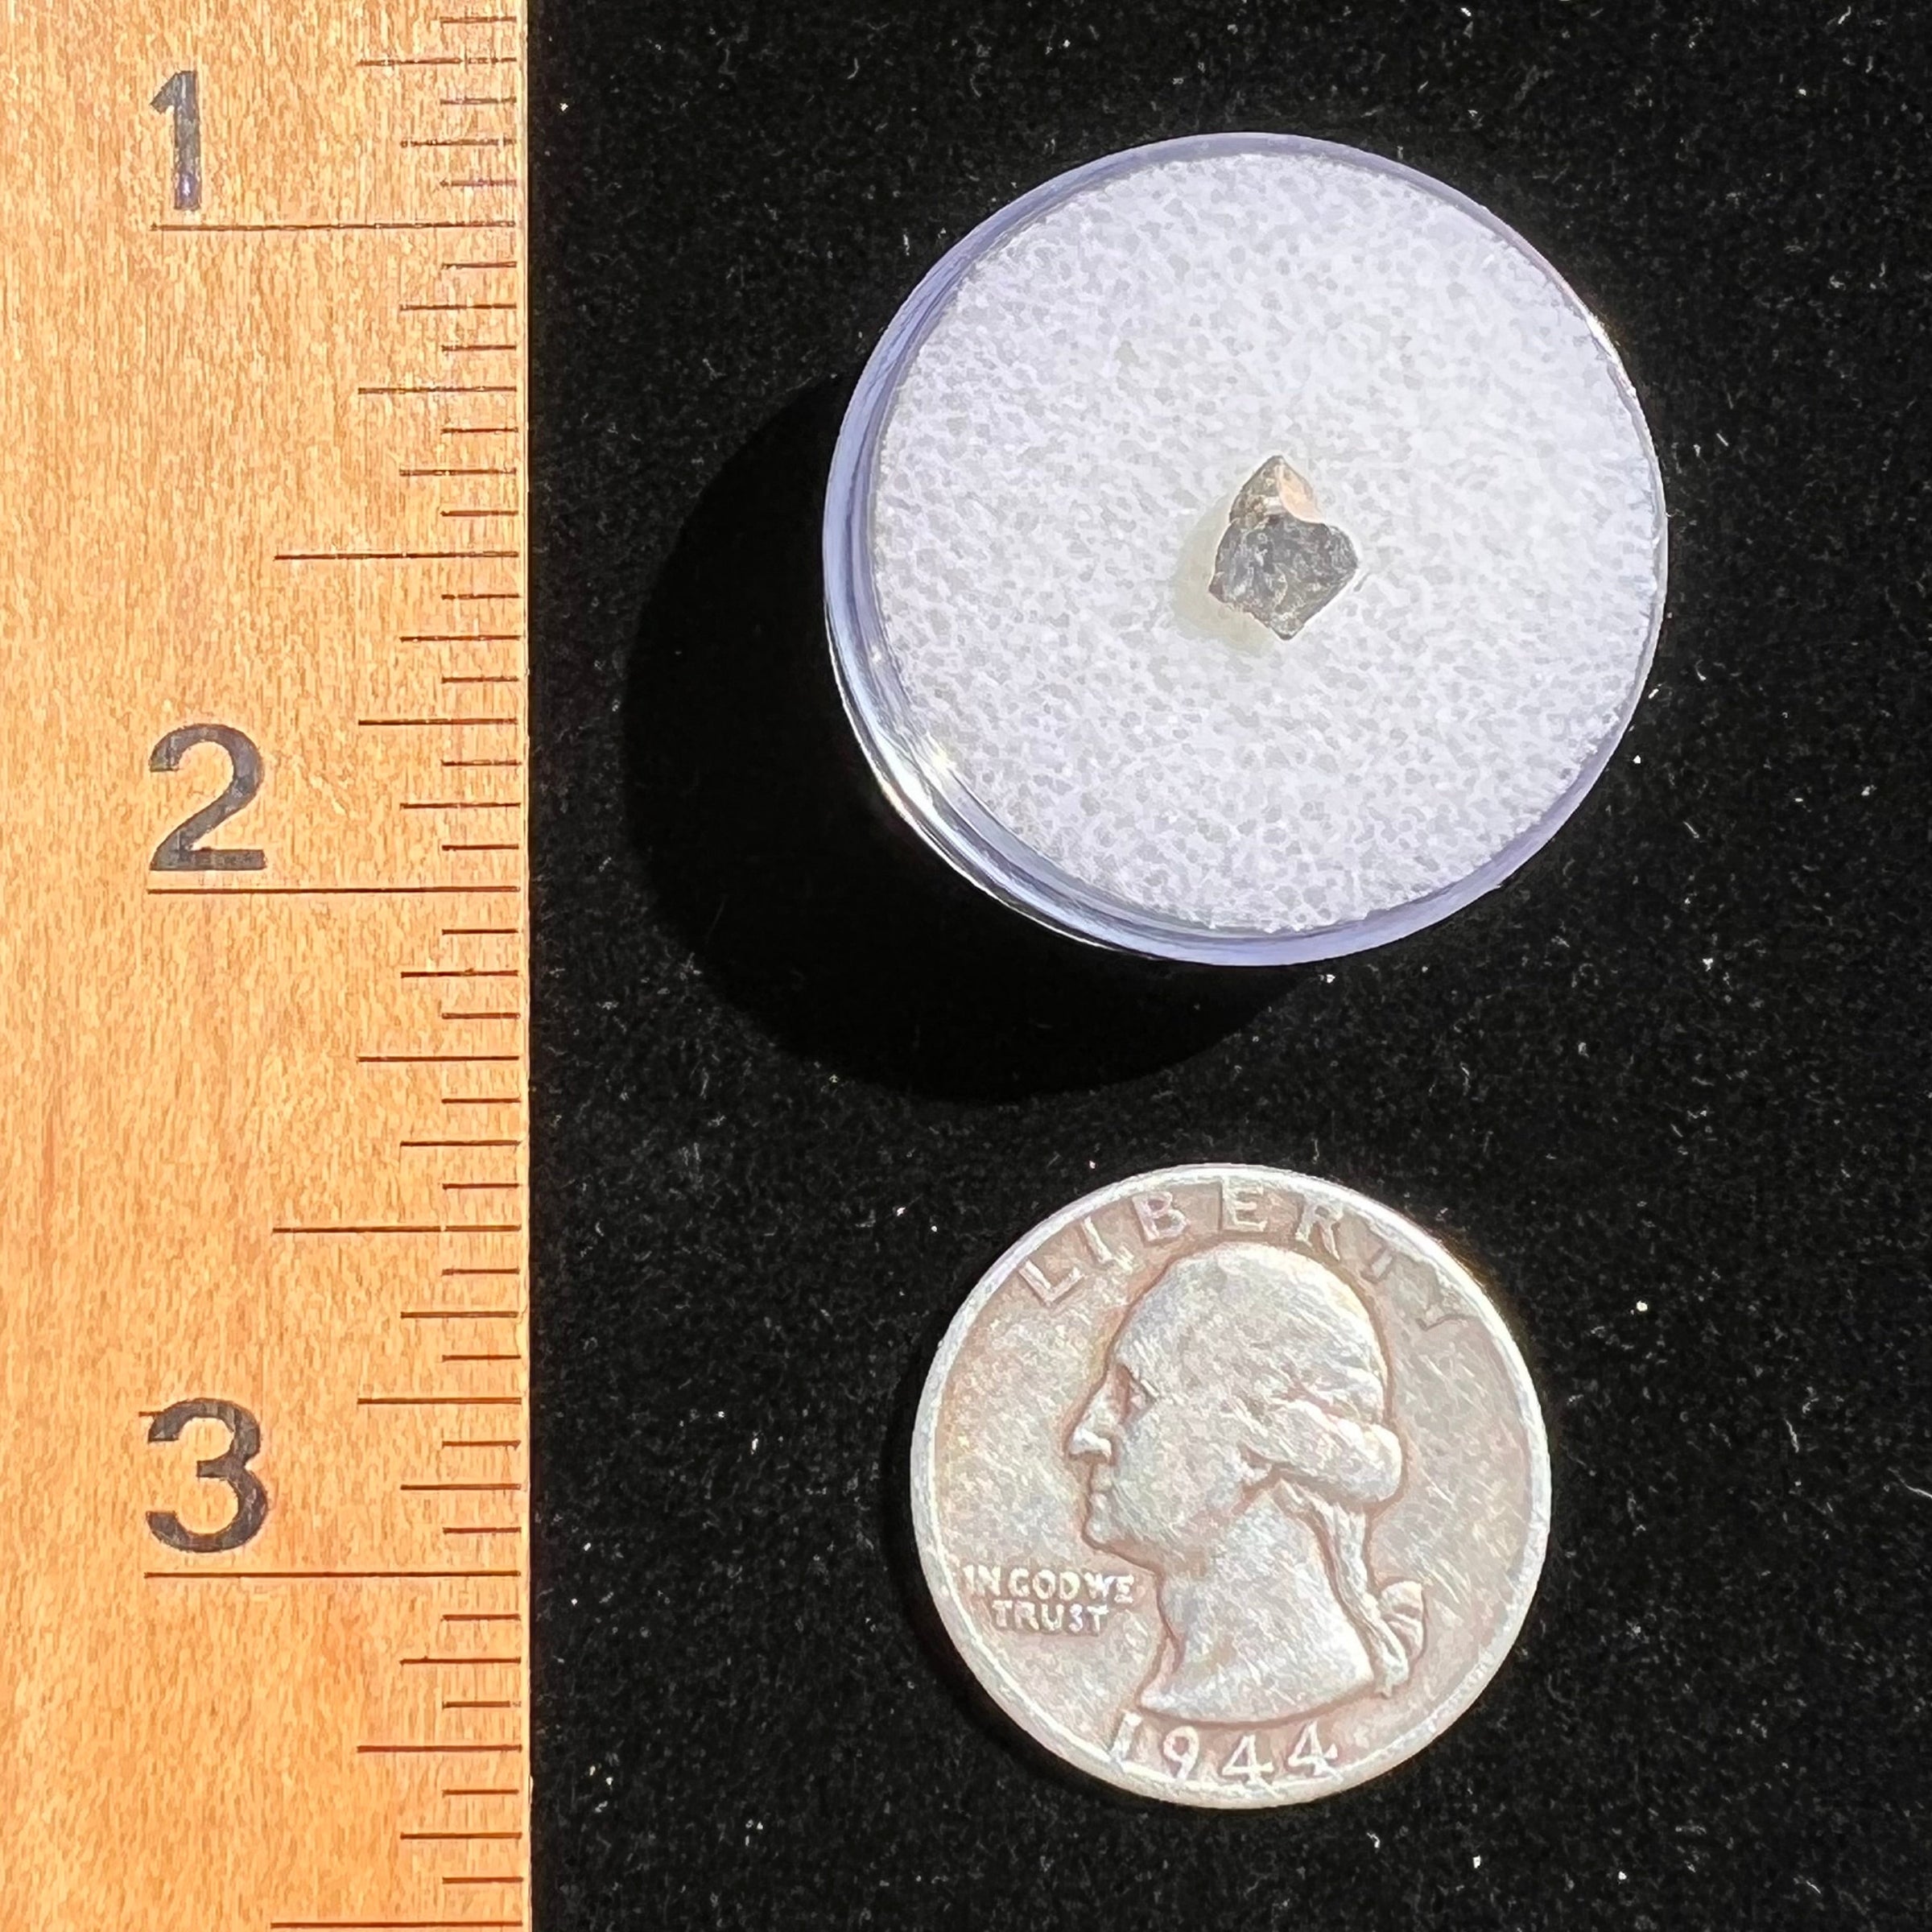 NWA 13974 Lunar Meteorite tiny fragment #125-Moldavite Life